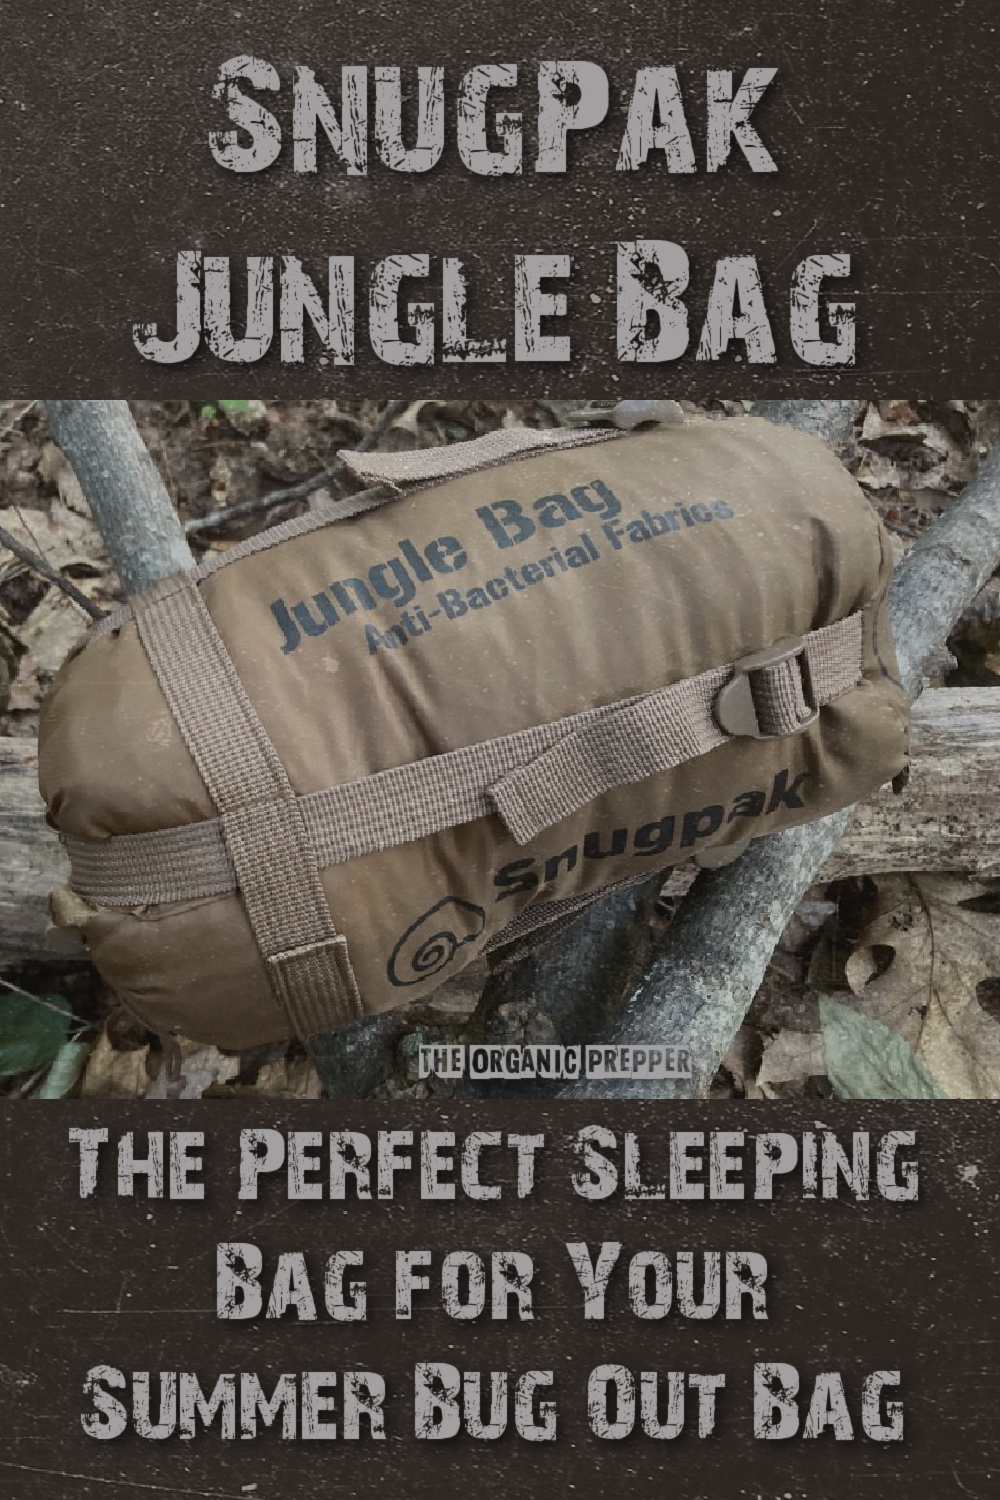 SnugPak Jungle Bag: The Perfect Sleeping Bag for Your Summer Bug Out Bag